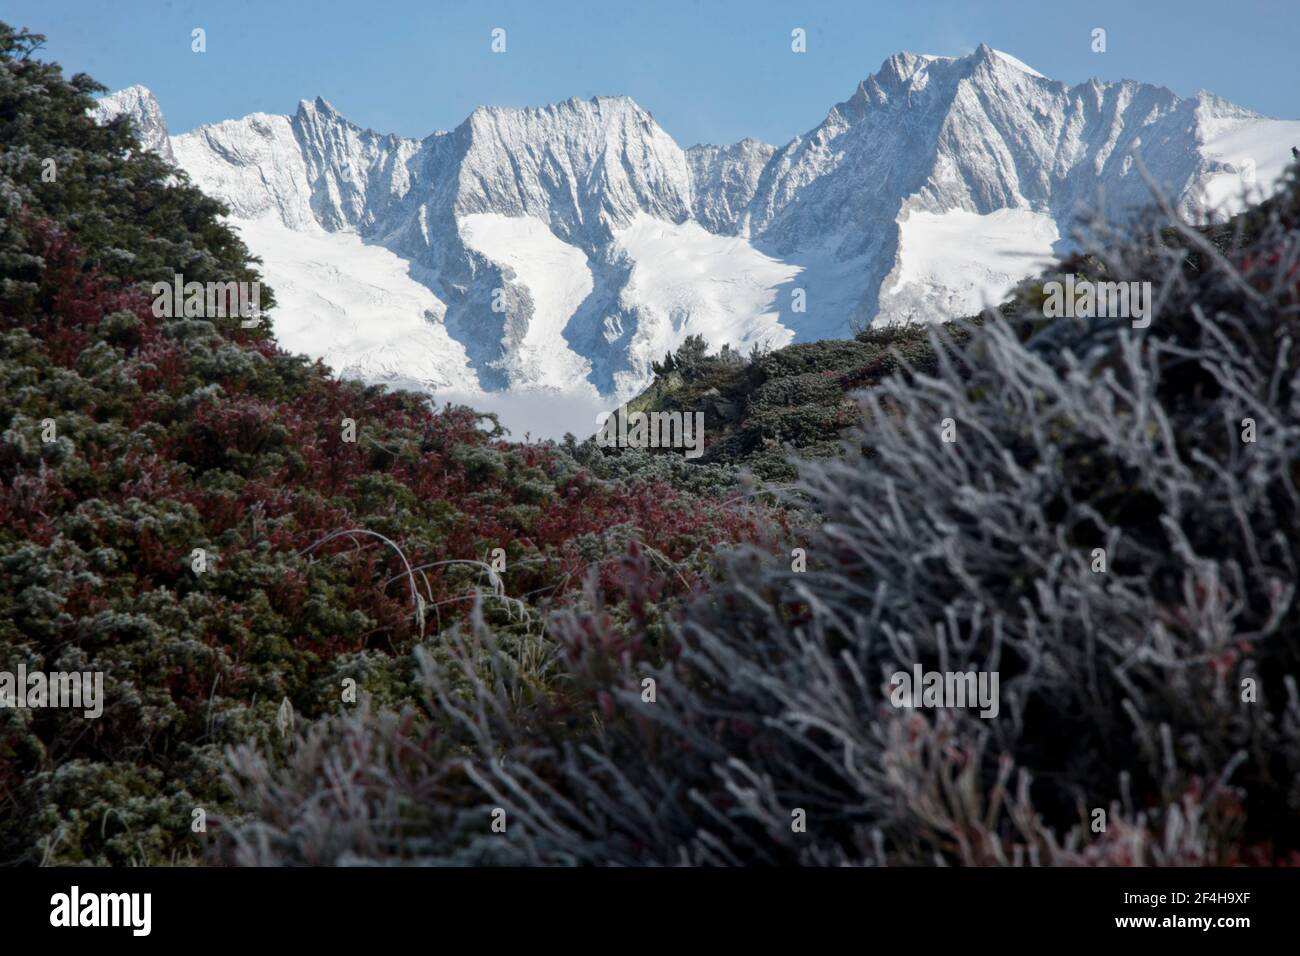 Eindrücke aus dem Unesco-Welterbe Aletsch, grosses Schutzgebiet um den grössten Gletscher der Alpen Foto Stock